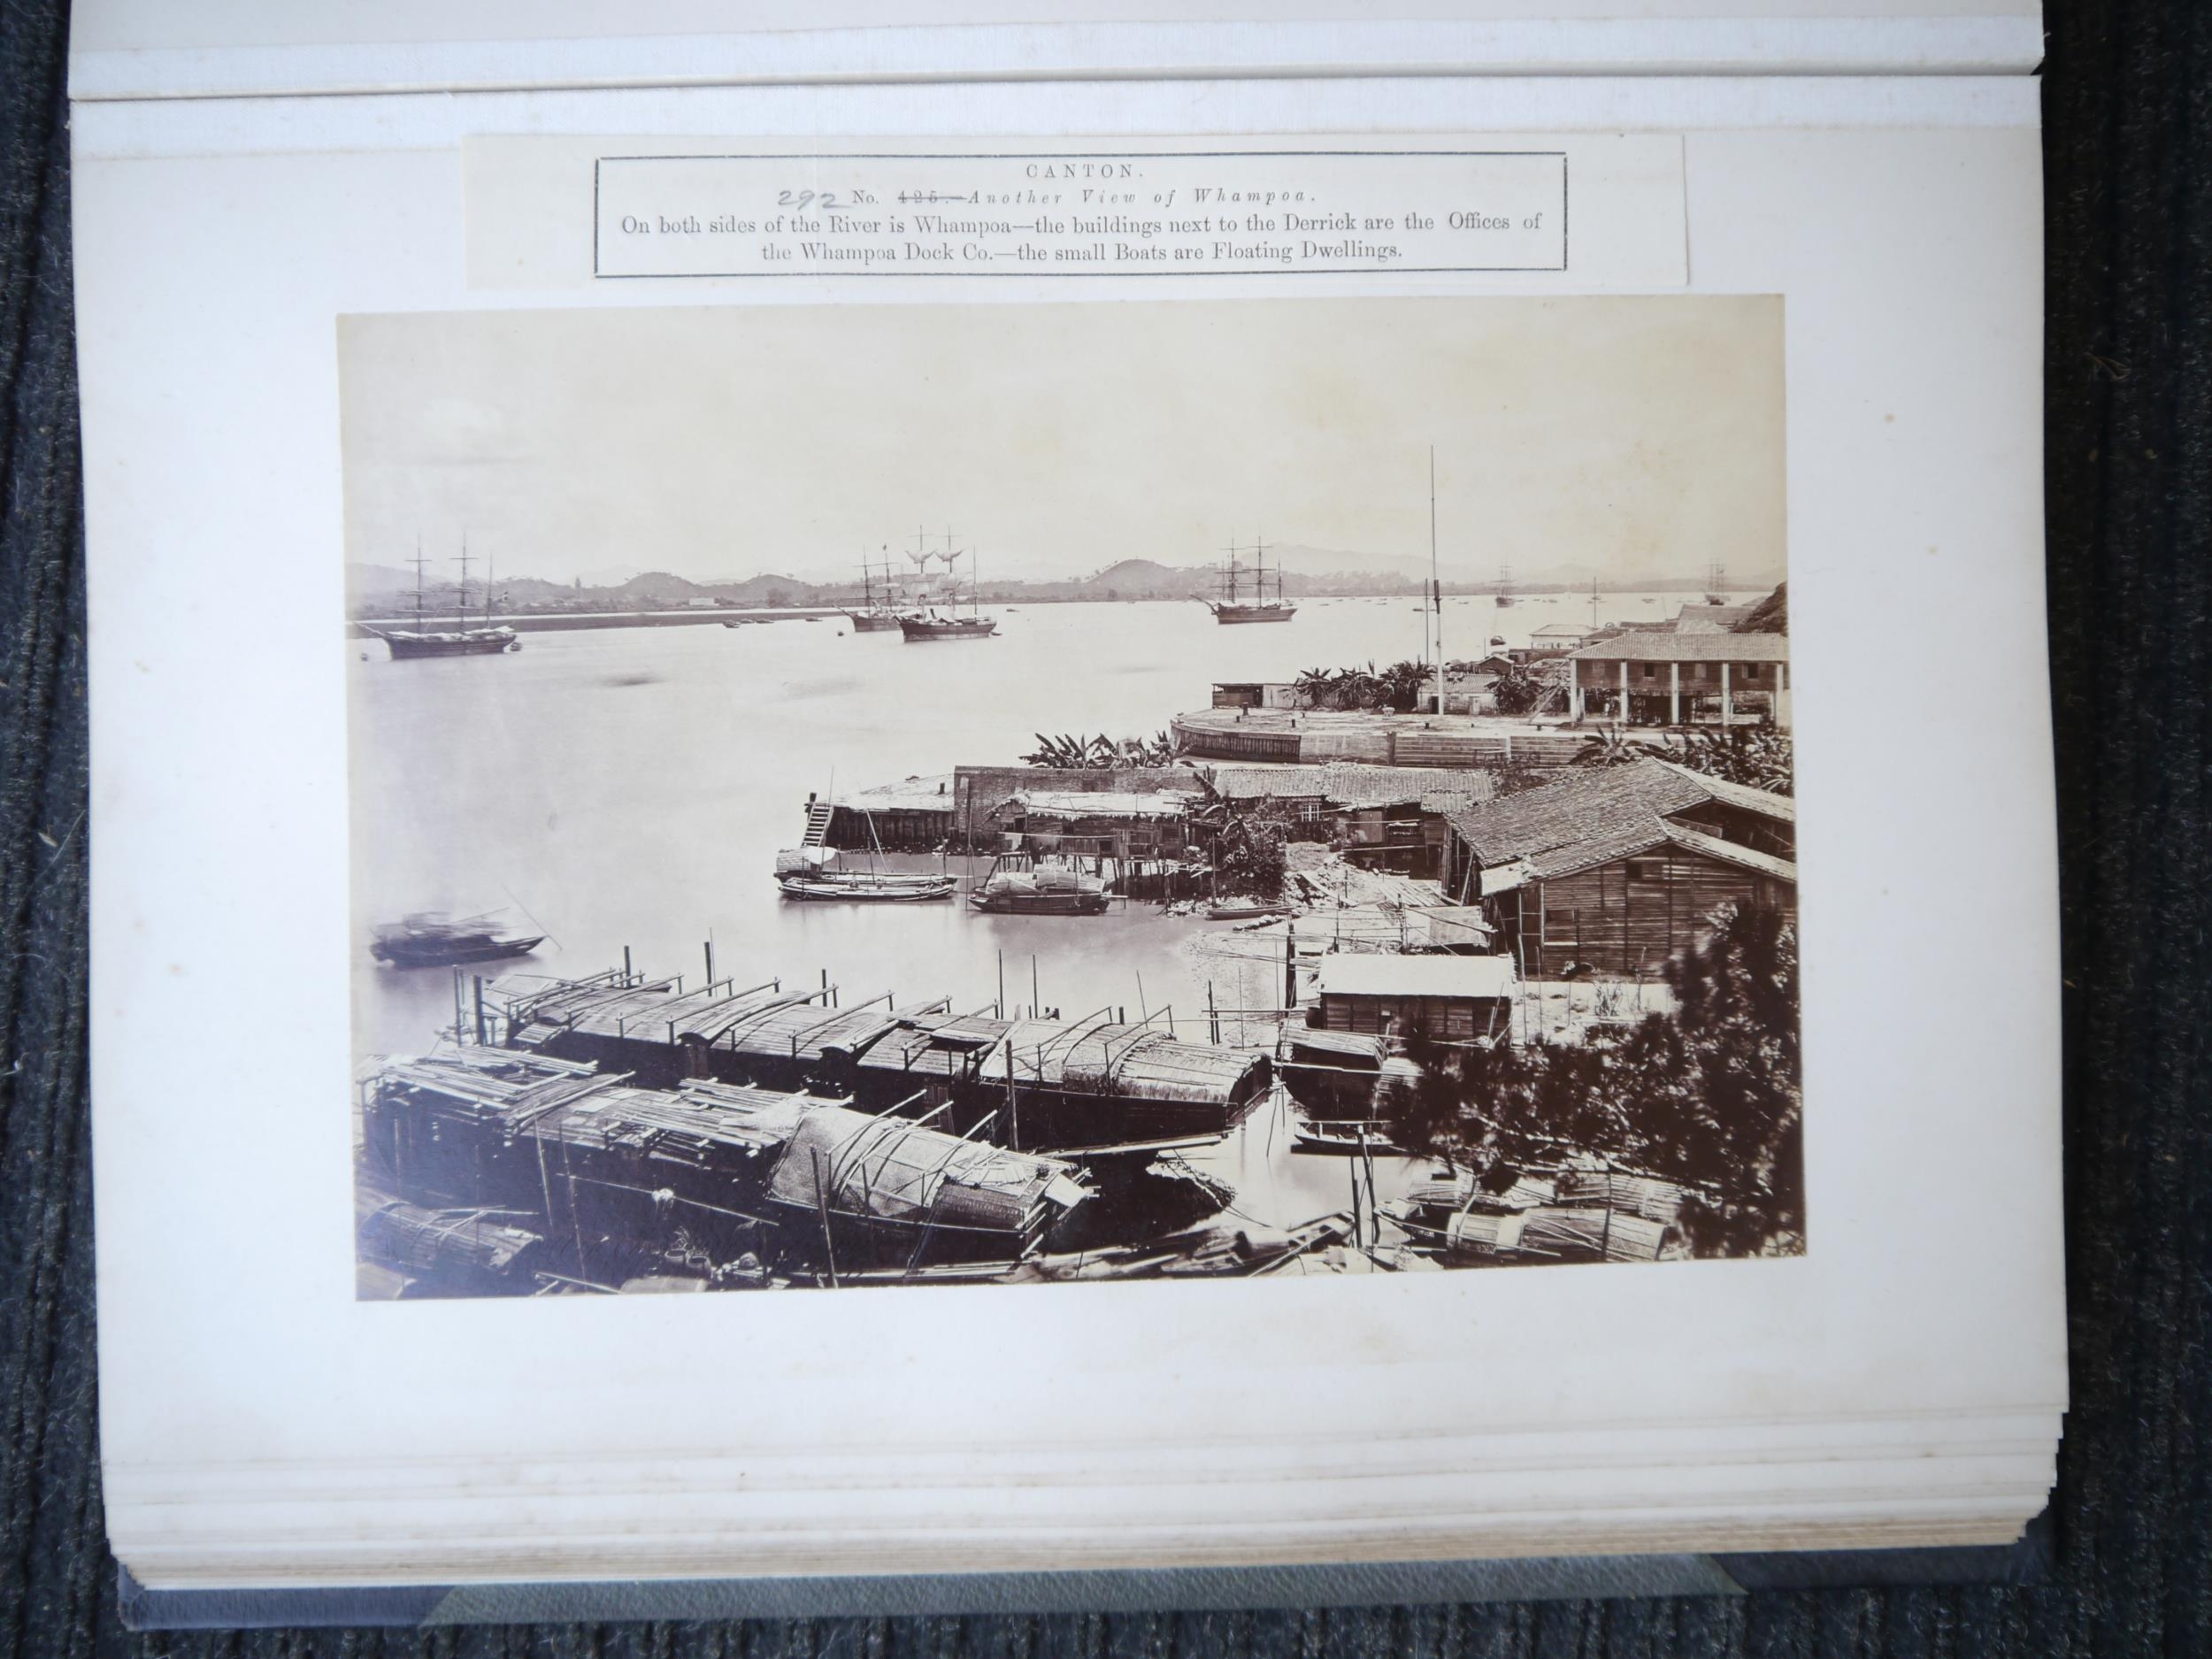 (Lai Afong, China, Canton, Hong Kong, Singapore, Asia.) Three large photograph albums containing